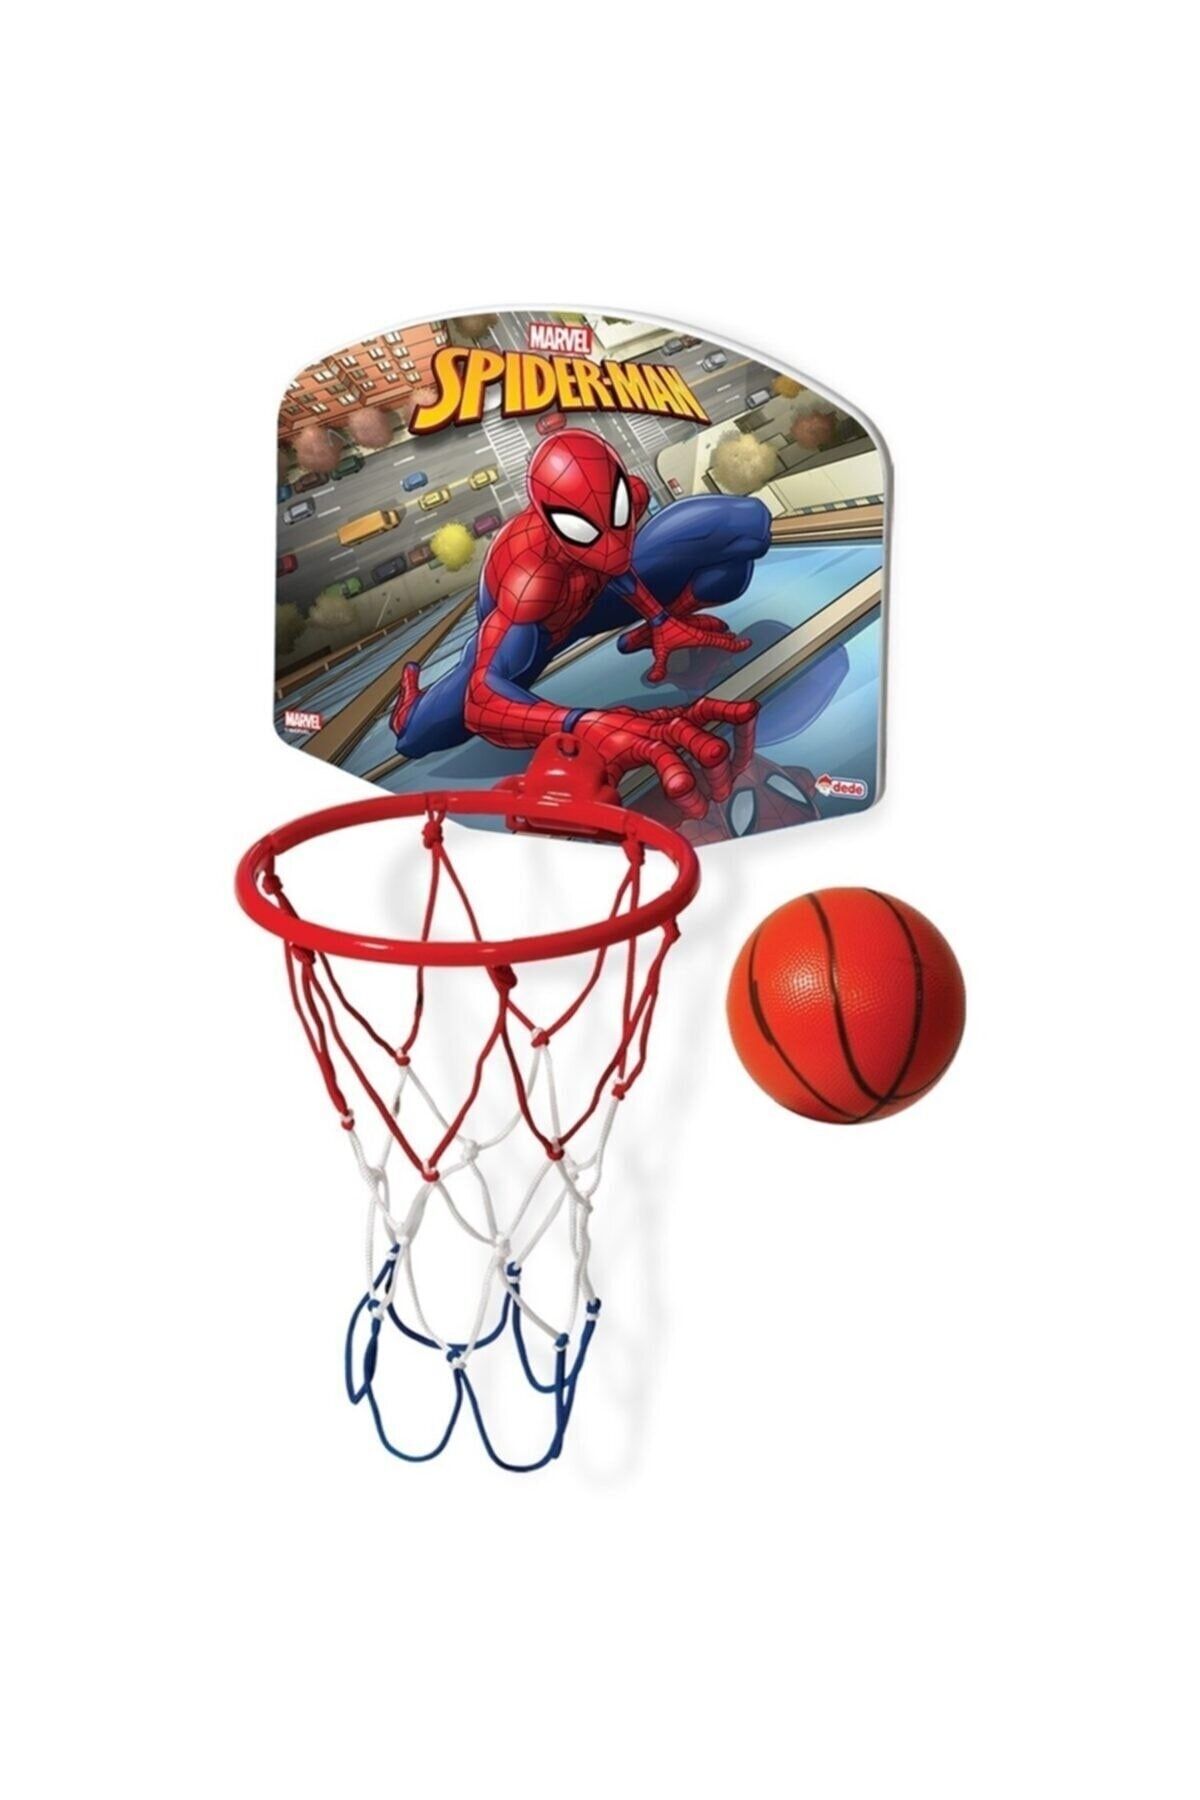 Spiderman Lisanslı Pota + Basketbol Topu Oyun Seti